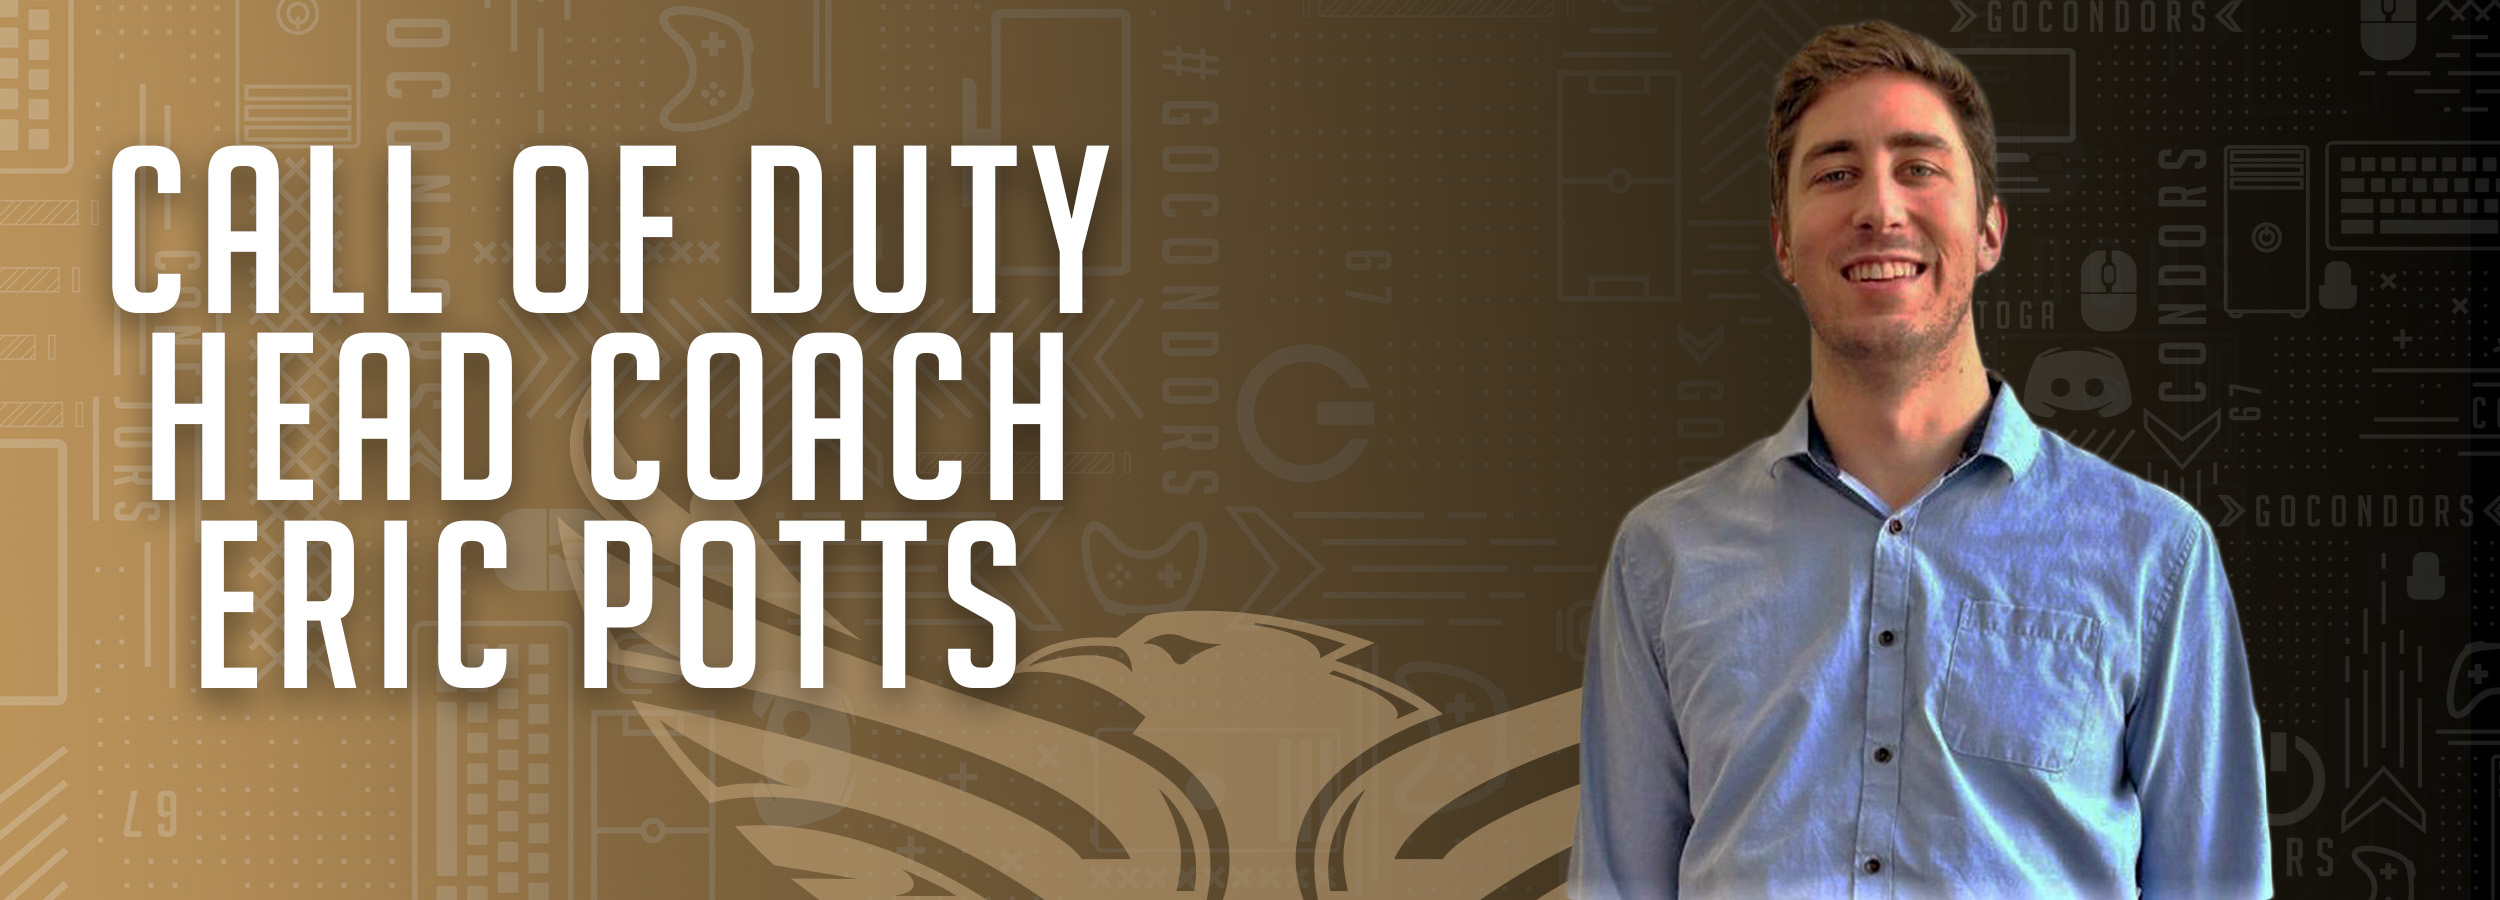 Condors Esports Name Eric Potts as Head Coach of Call of Duty